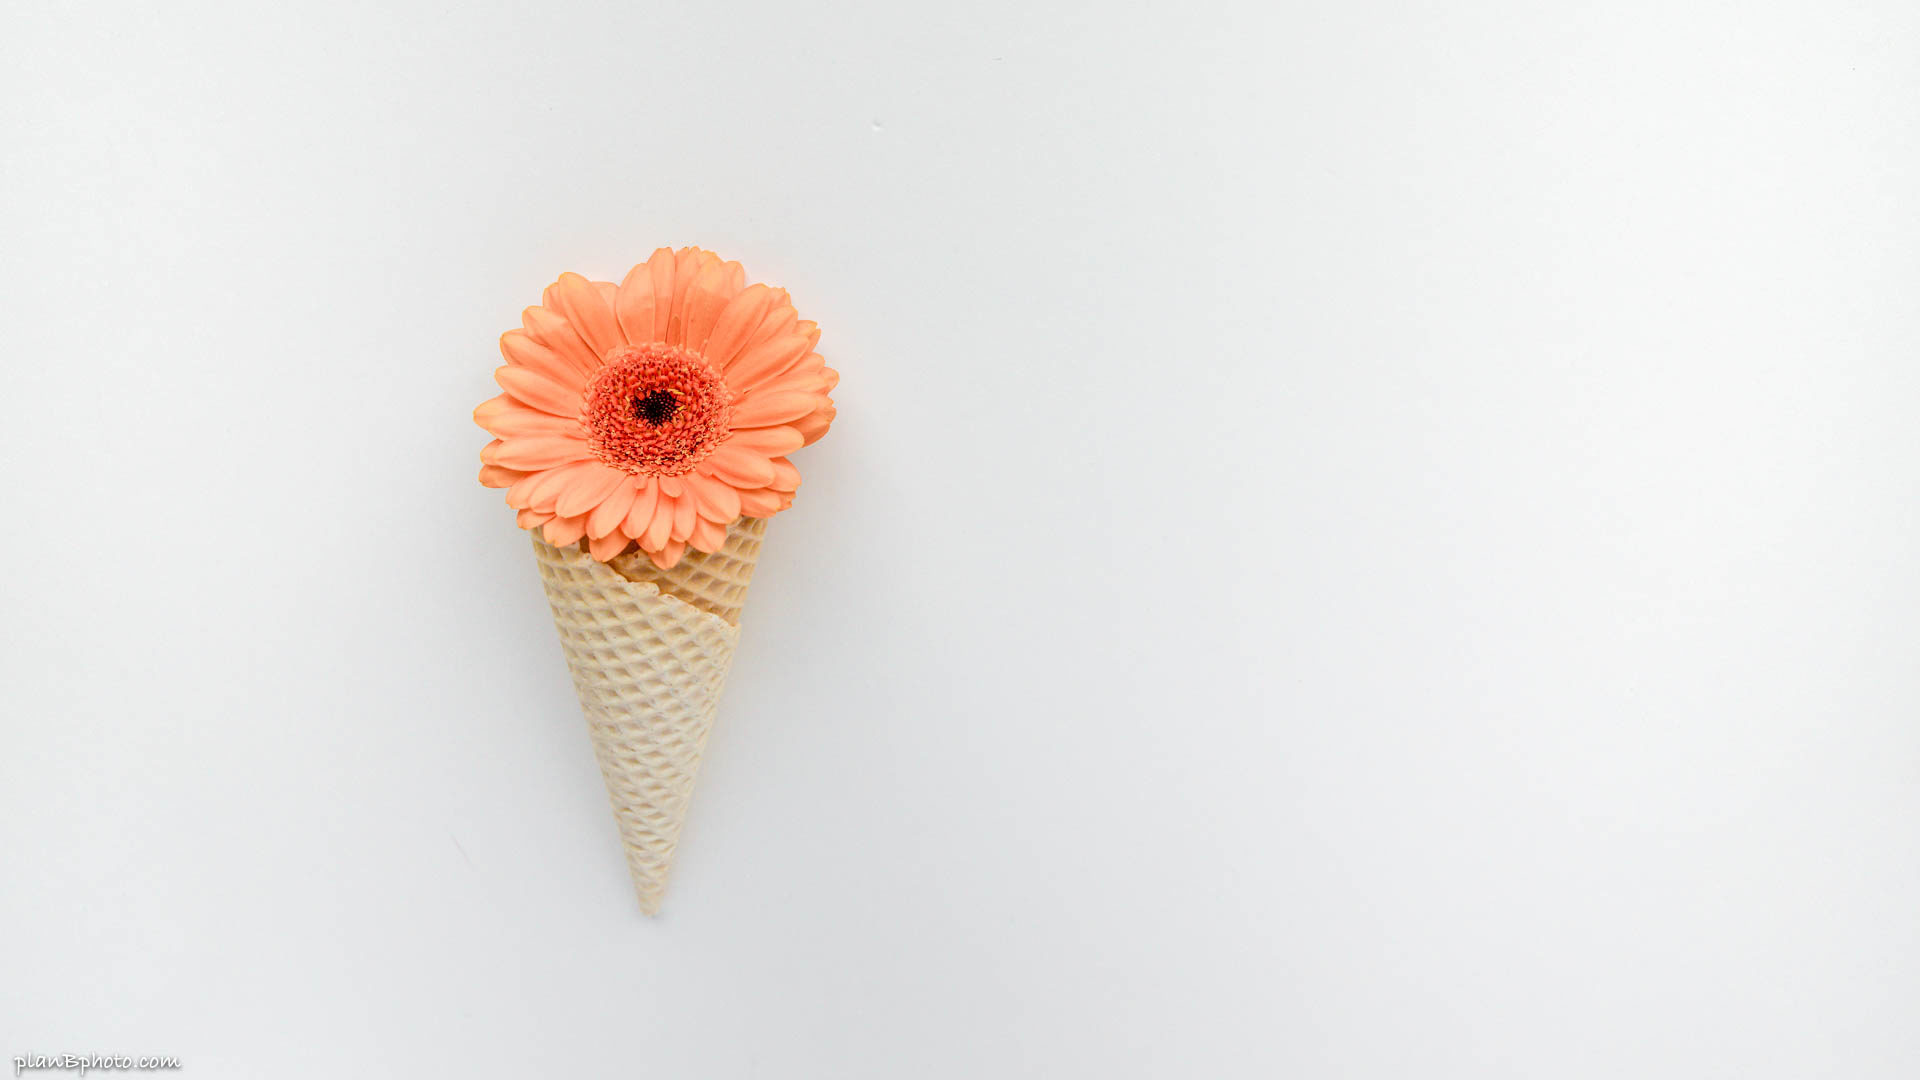 Beautiful orange Gerbera flower in an ice cream cone on a white background